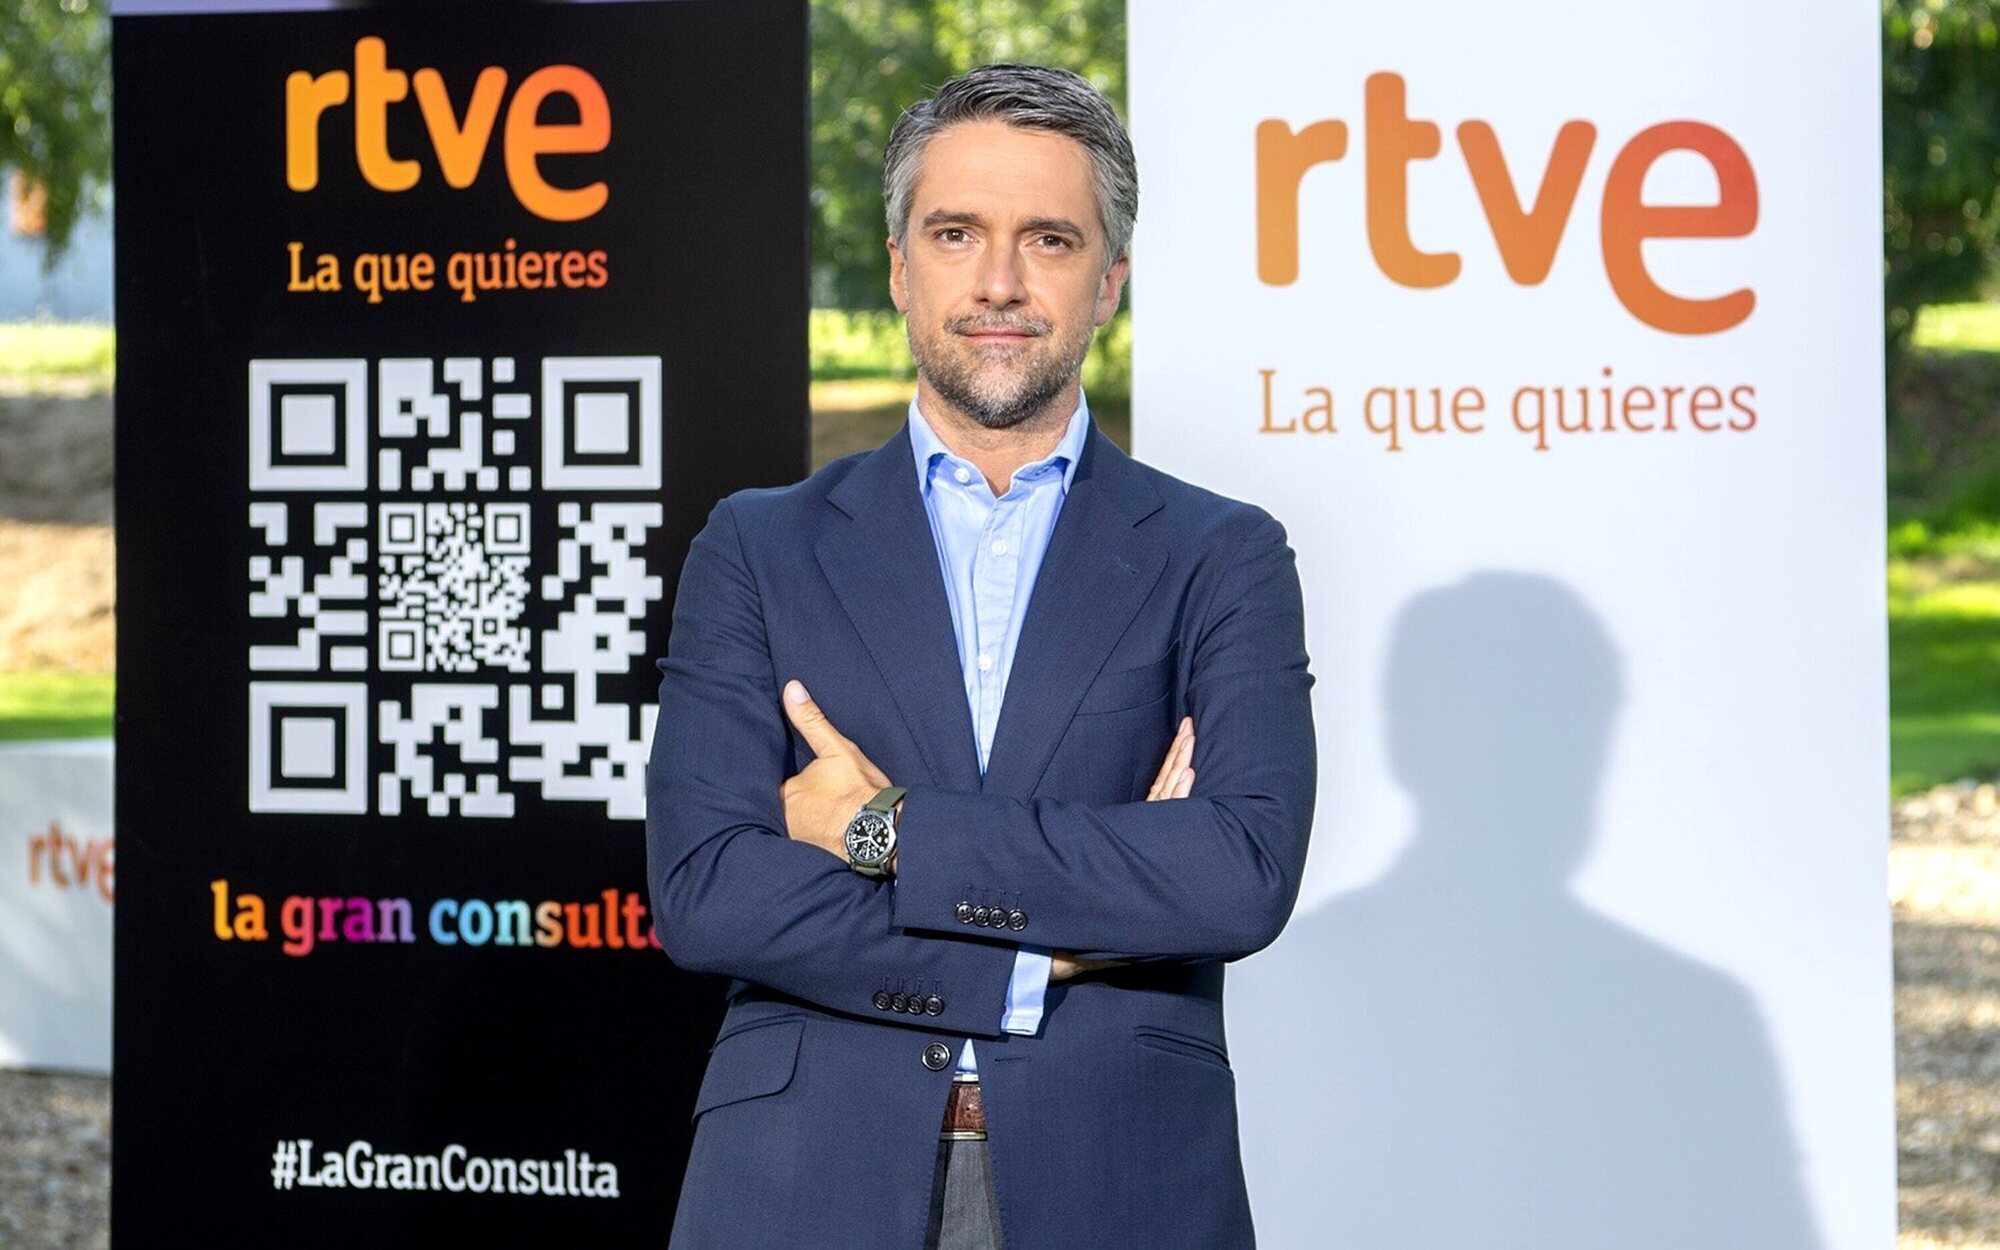 Carlos Franganillo salta a 'Informativos Telecinco' para sustituir a Pedro Piqueras, que se retira